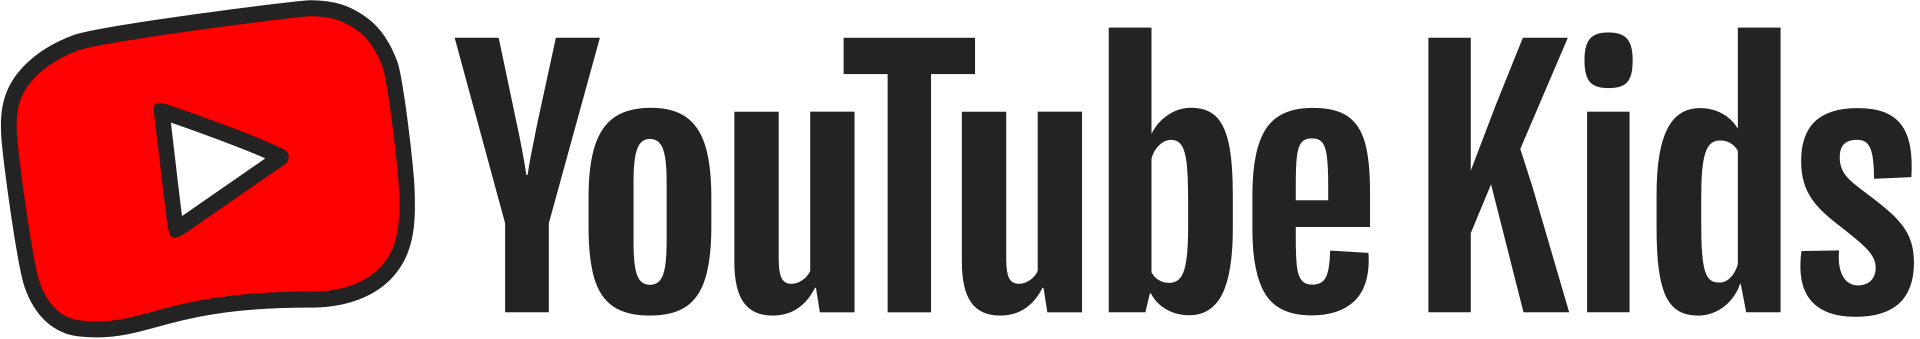 YouTube Kids Logo Blank Meme Template